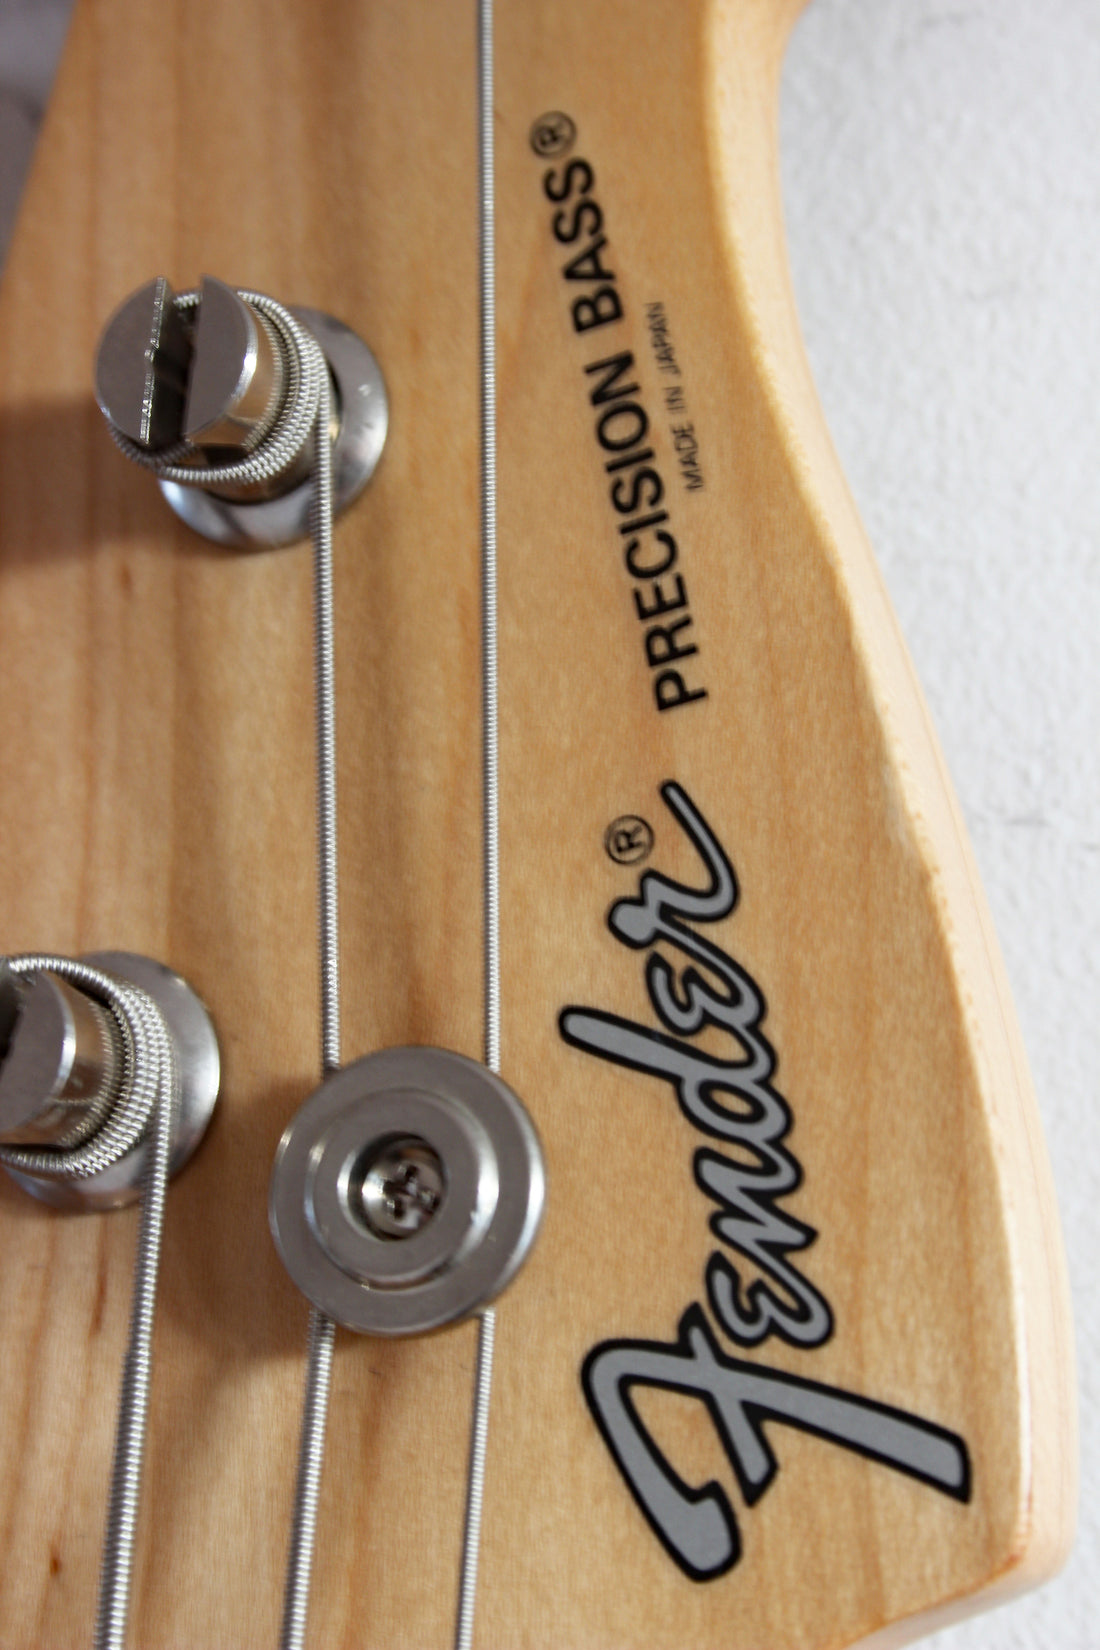 Used Fender Precision Bass PB43 Vintage White